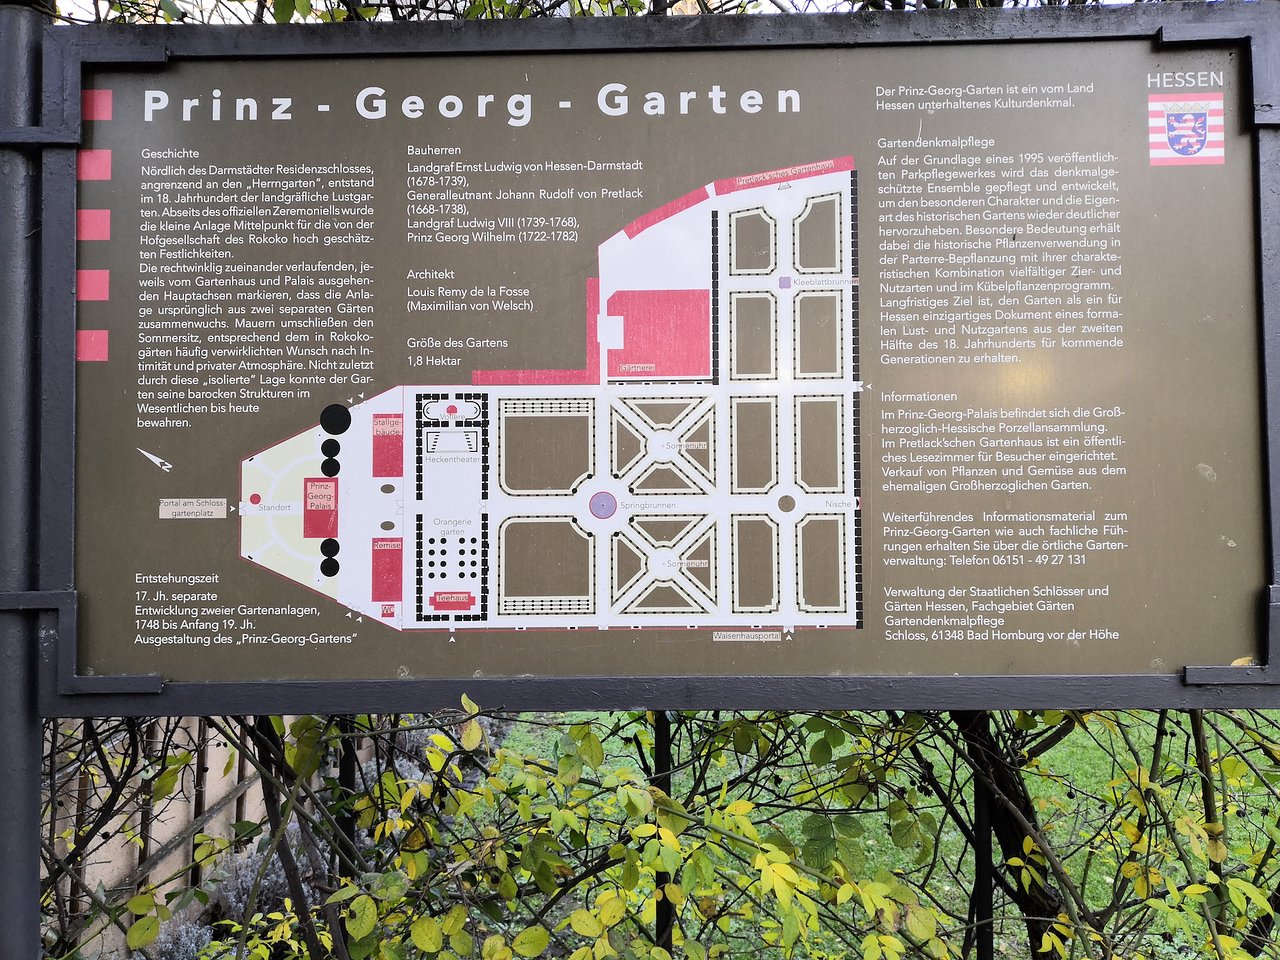 Garten De Einzigartig Prinz Georg Garten ÐÐ°ÑÐ¼ÑÑÐ°Ð´Ñ Ð ÑÑÑÐ¸Ðµ ÑÐ¾Ð²ÐµÑÑ Ð¿ÐµÑÐµÐ´ Ð¿Ð¾ÑÐµÑÐµÐ½Ð¸ÐµÐ¼